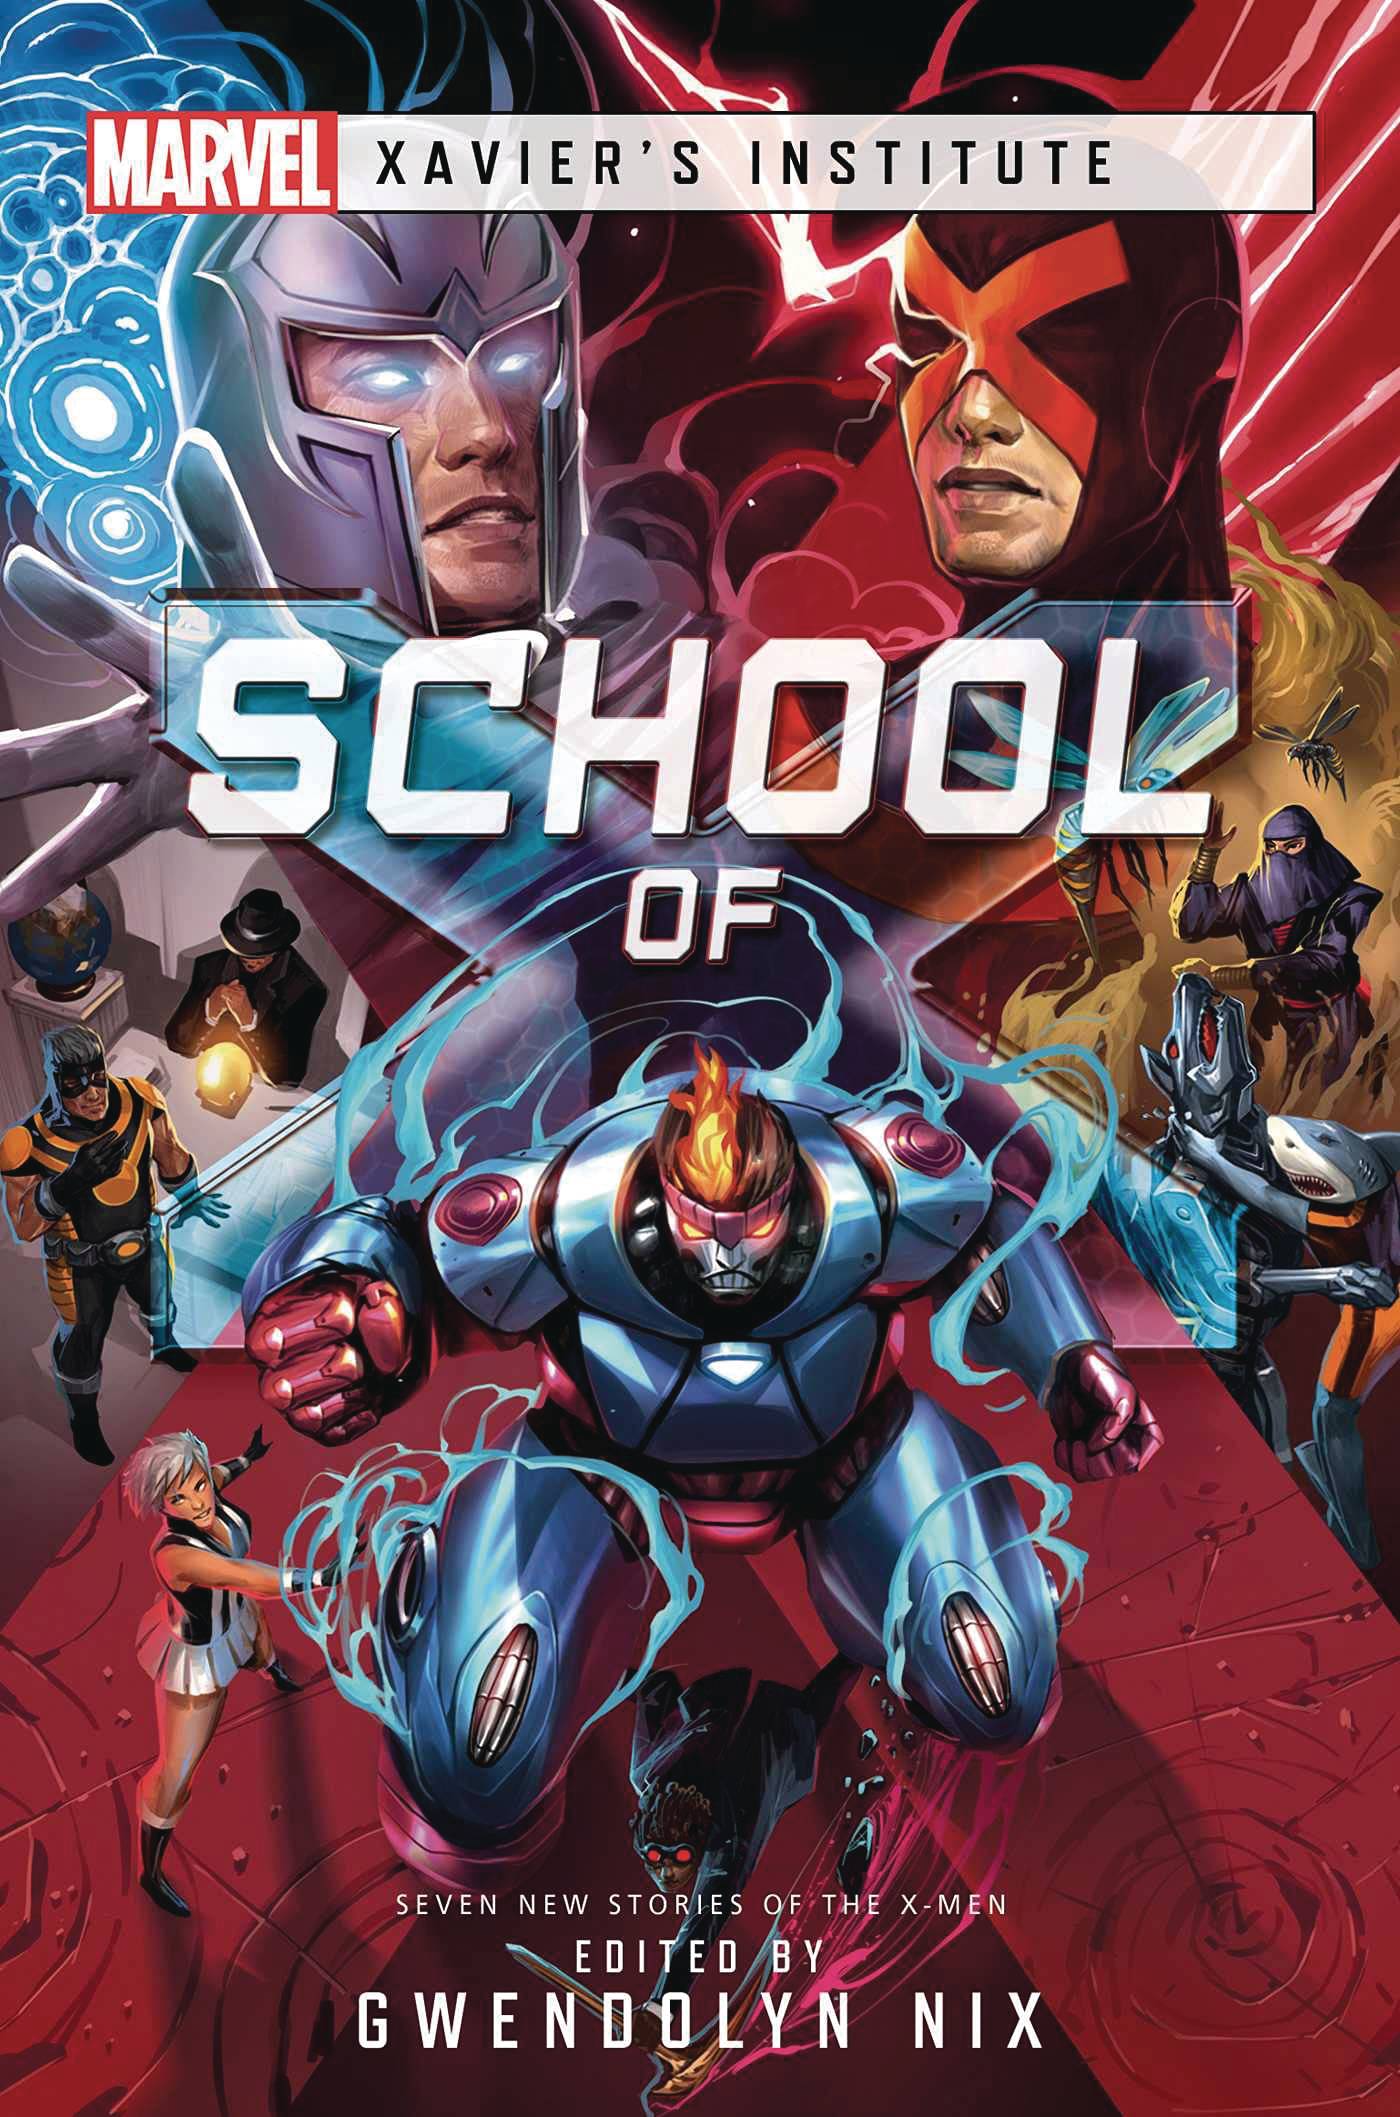 Marvel Xaviers Institute Novel Sc School Of X (C: 0-1-1) (12/08/2021) - State of Comics